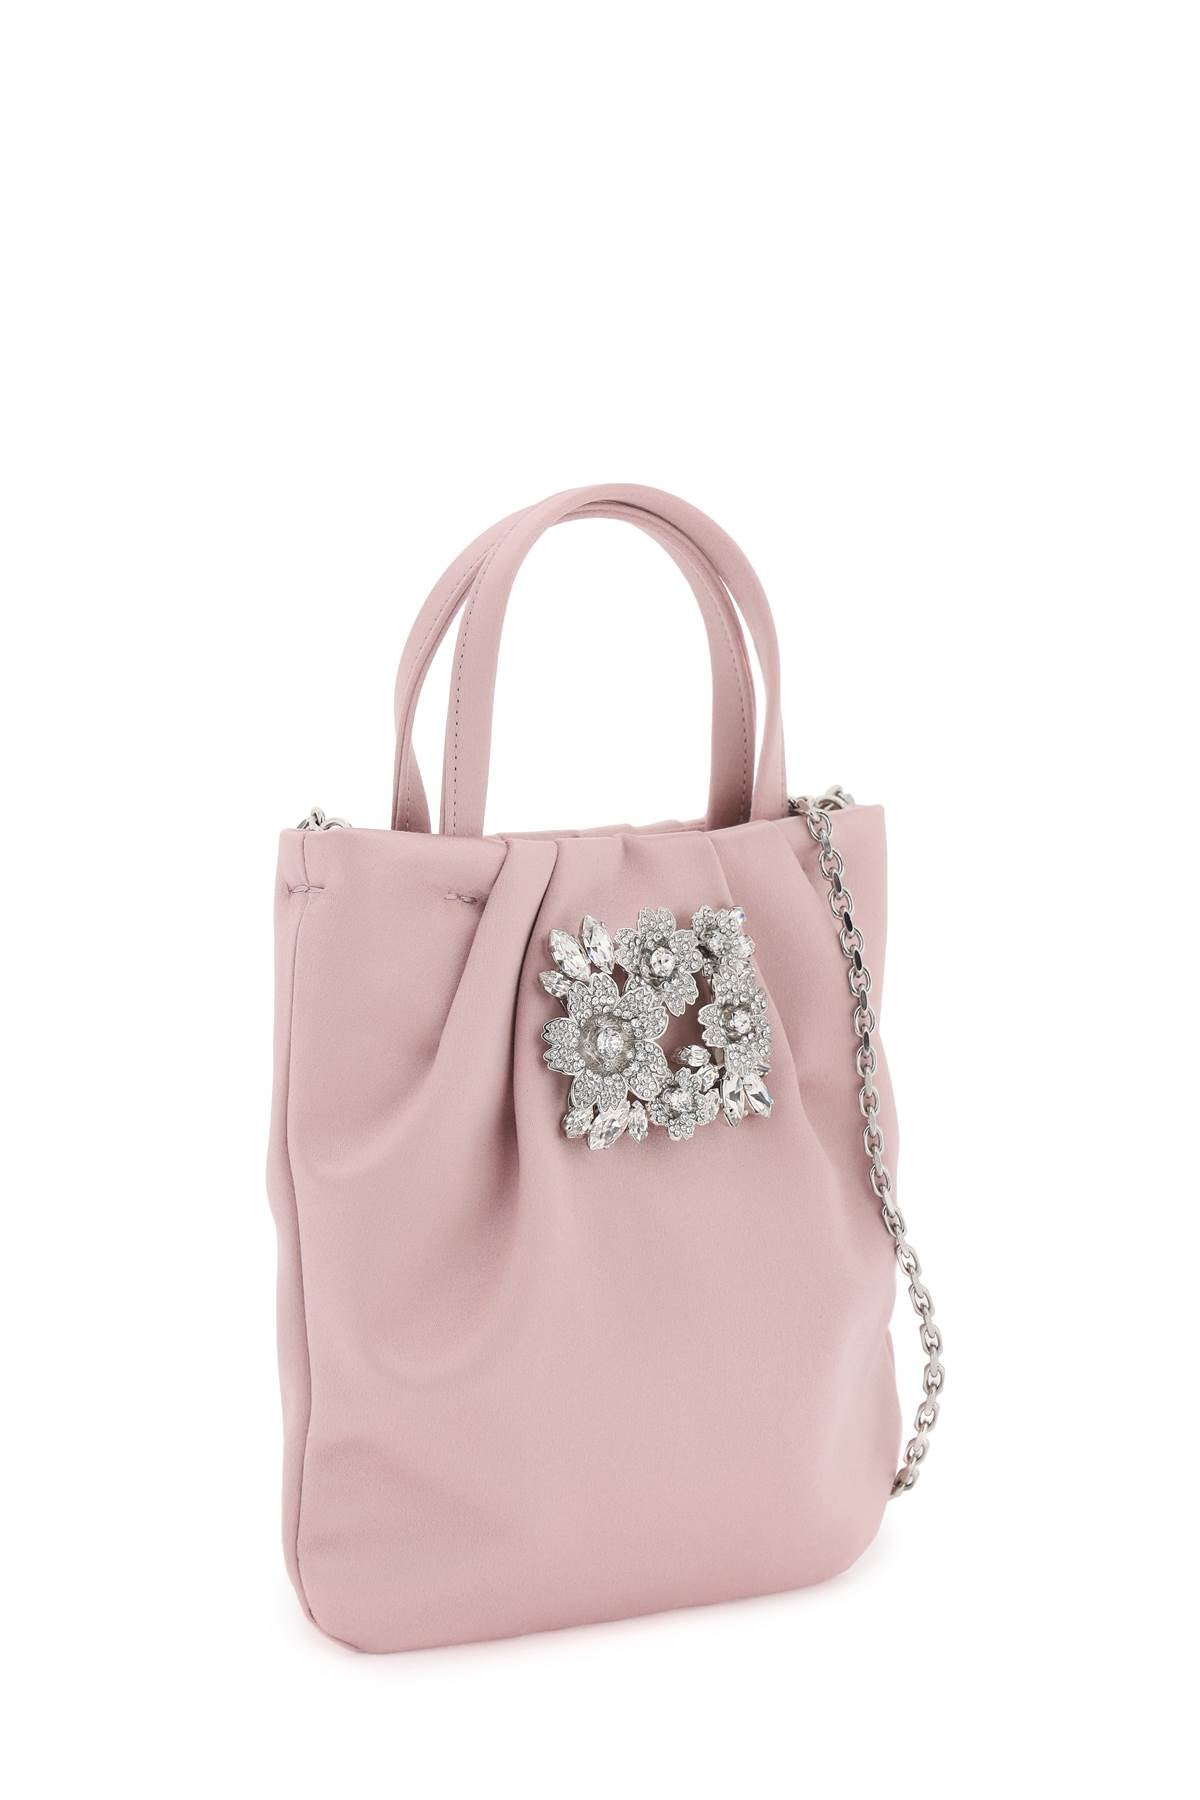 ROGER VIVIER Stunning Pink Satin Handbag with Crystal Bouquet Buckle